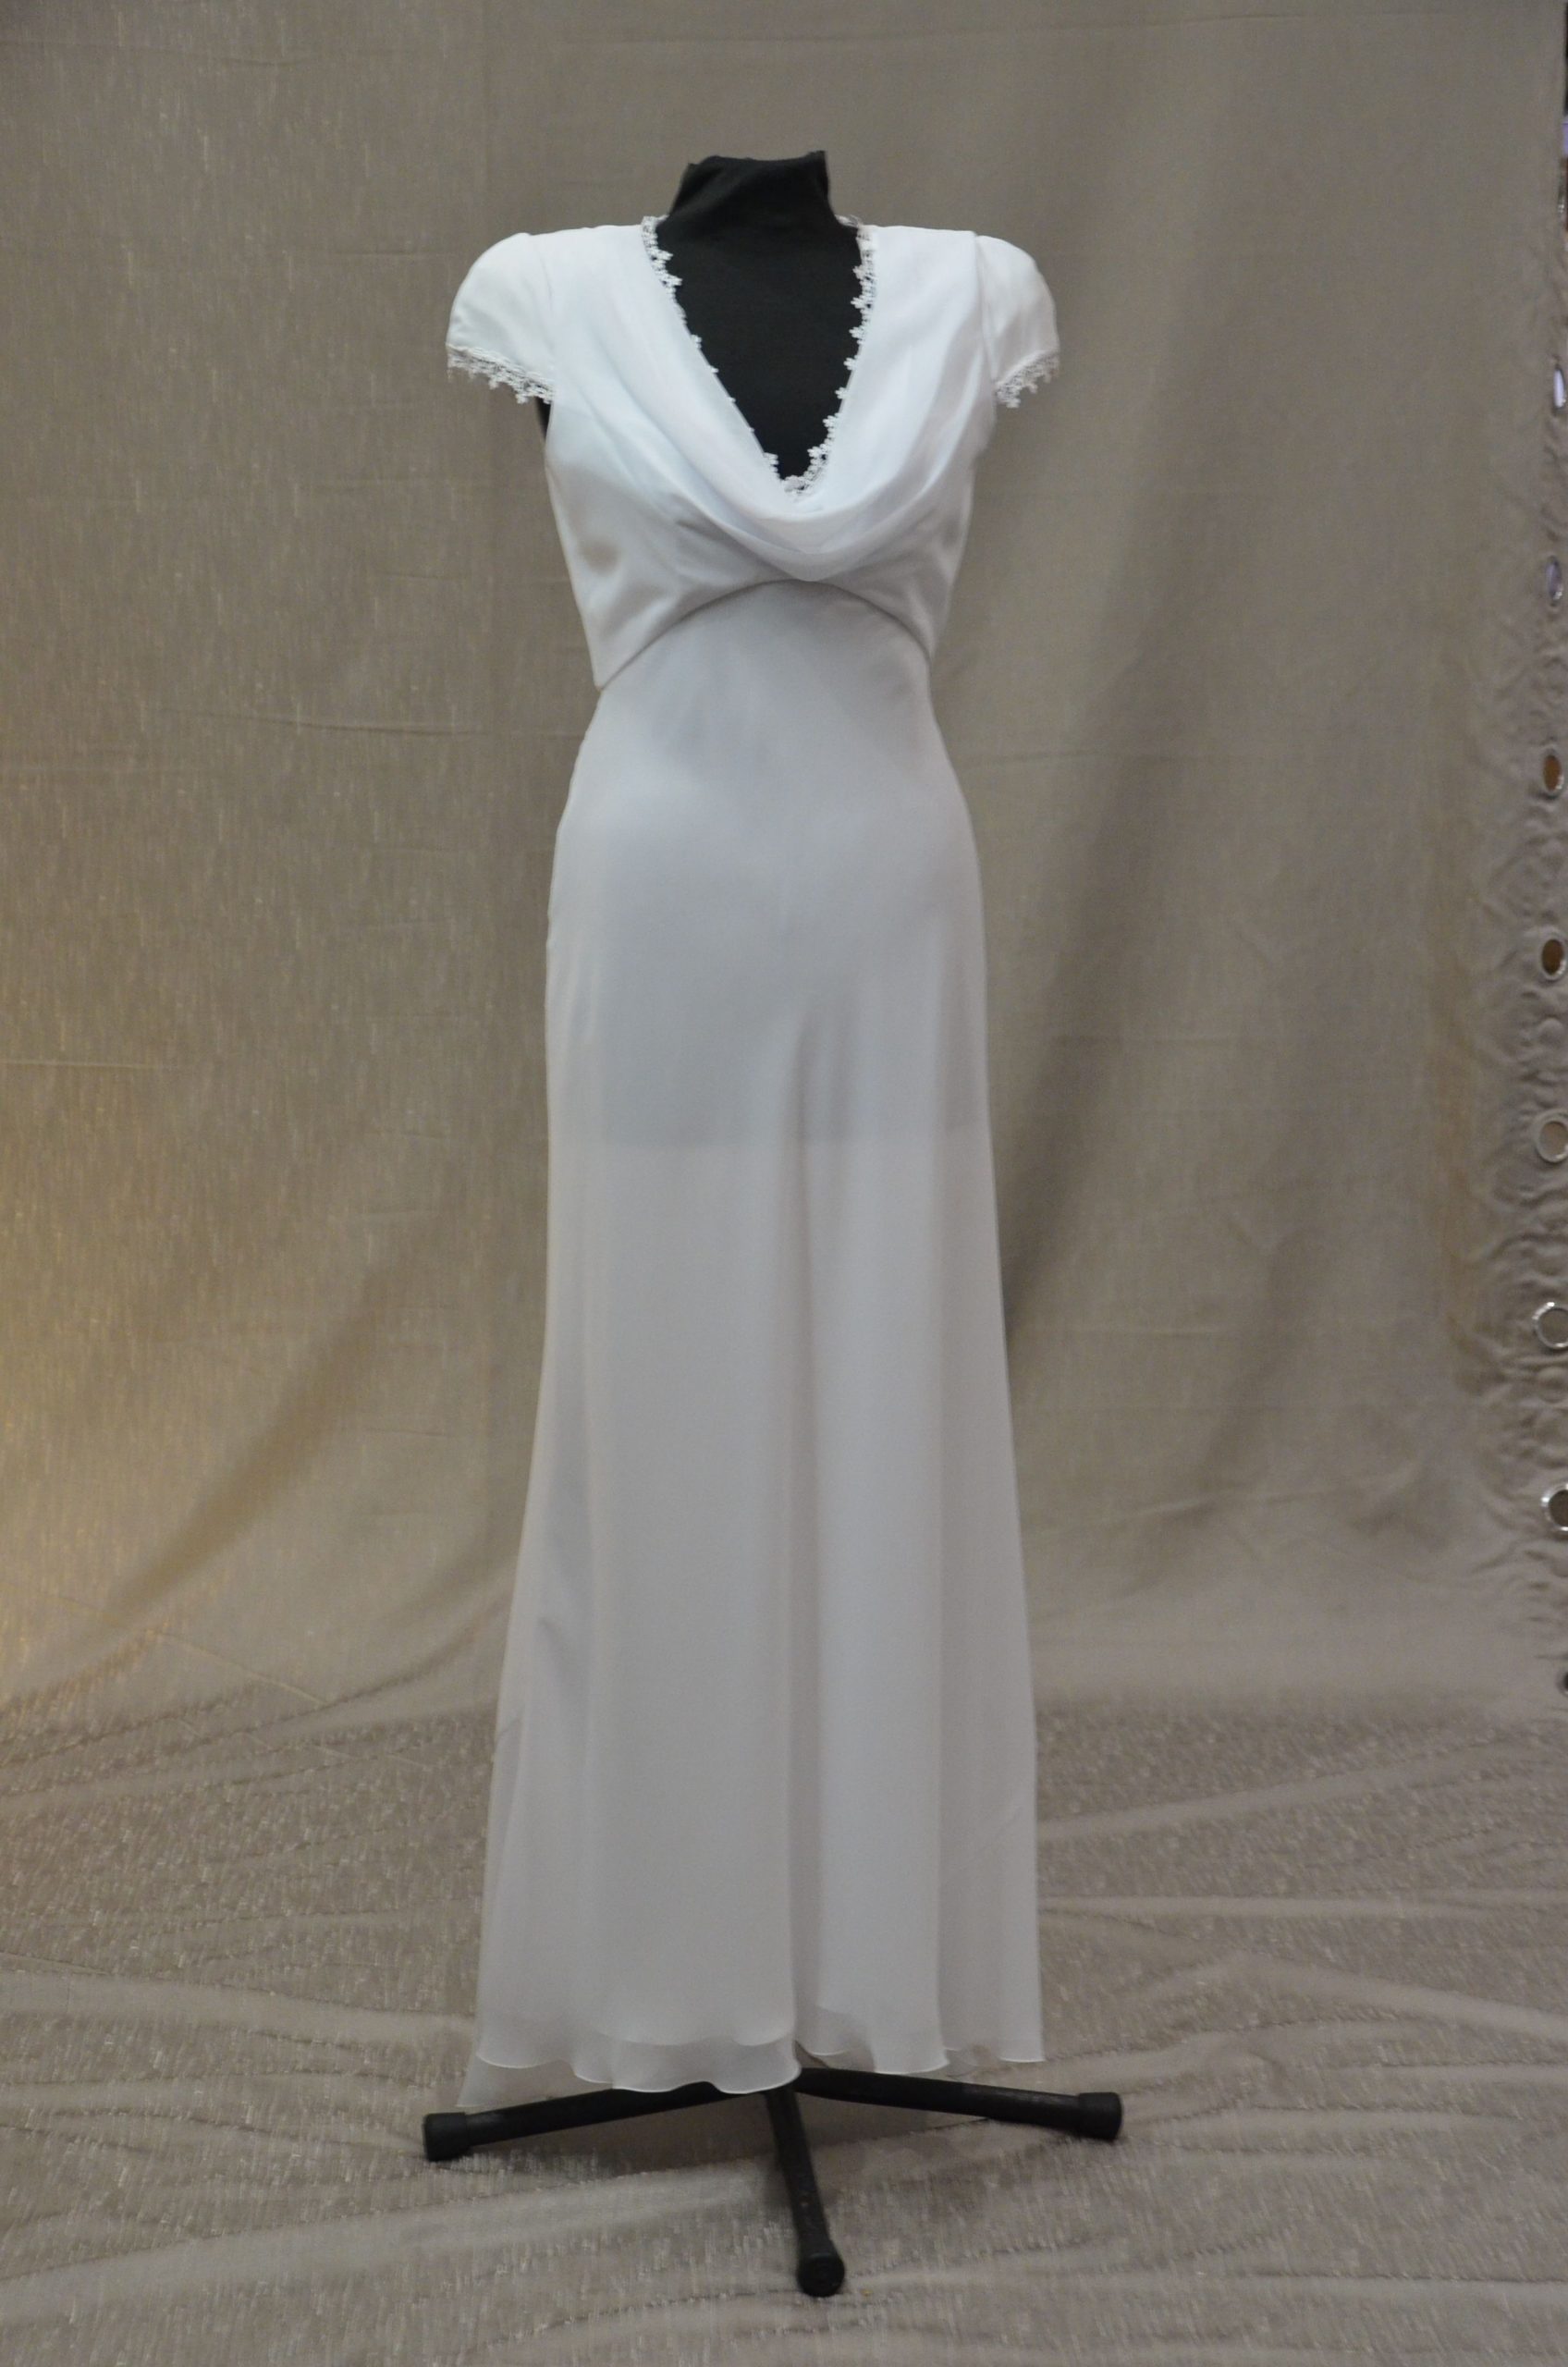 Simple Bridal or Debutante Gown, Australian Made, Mr K, size 10